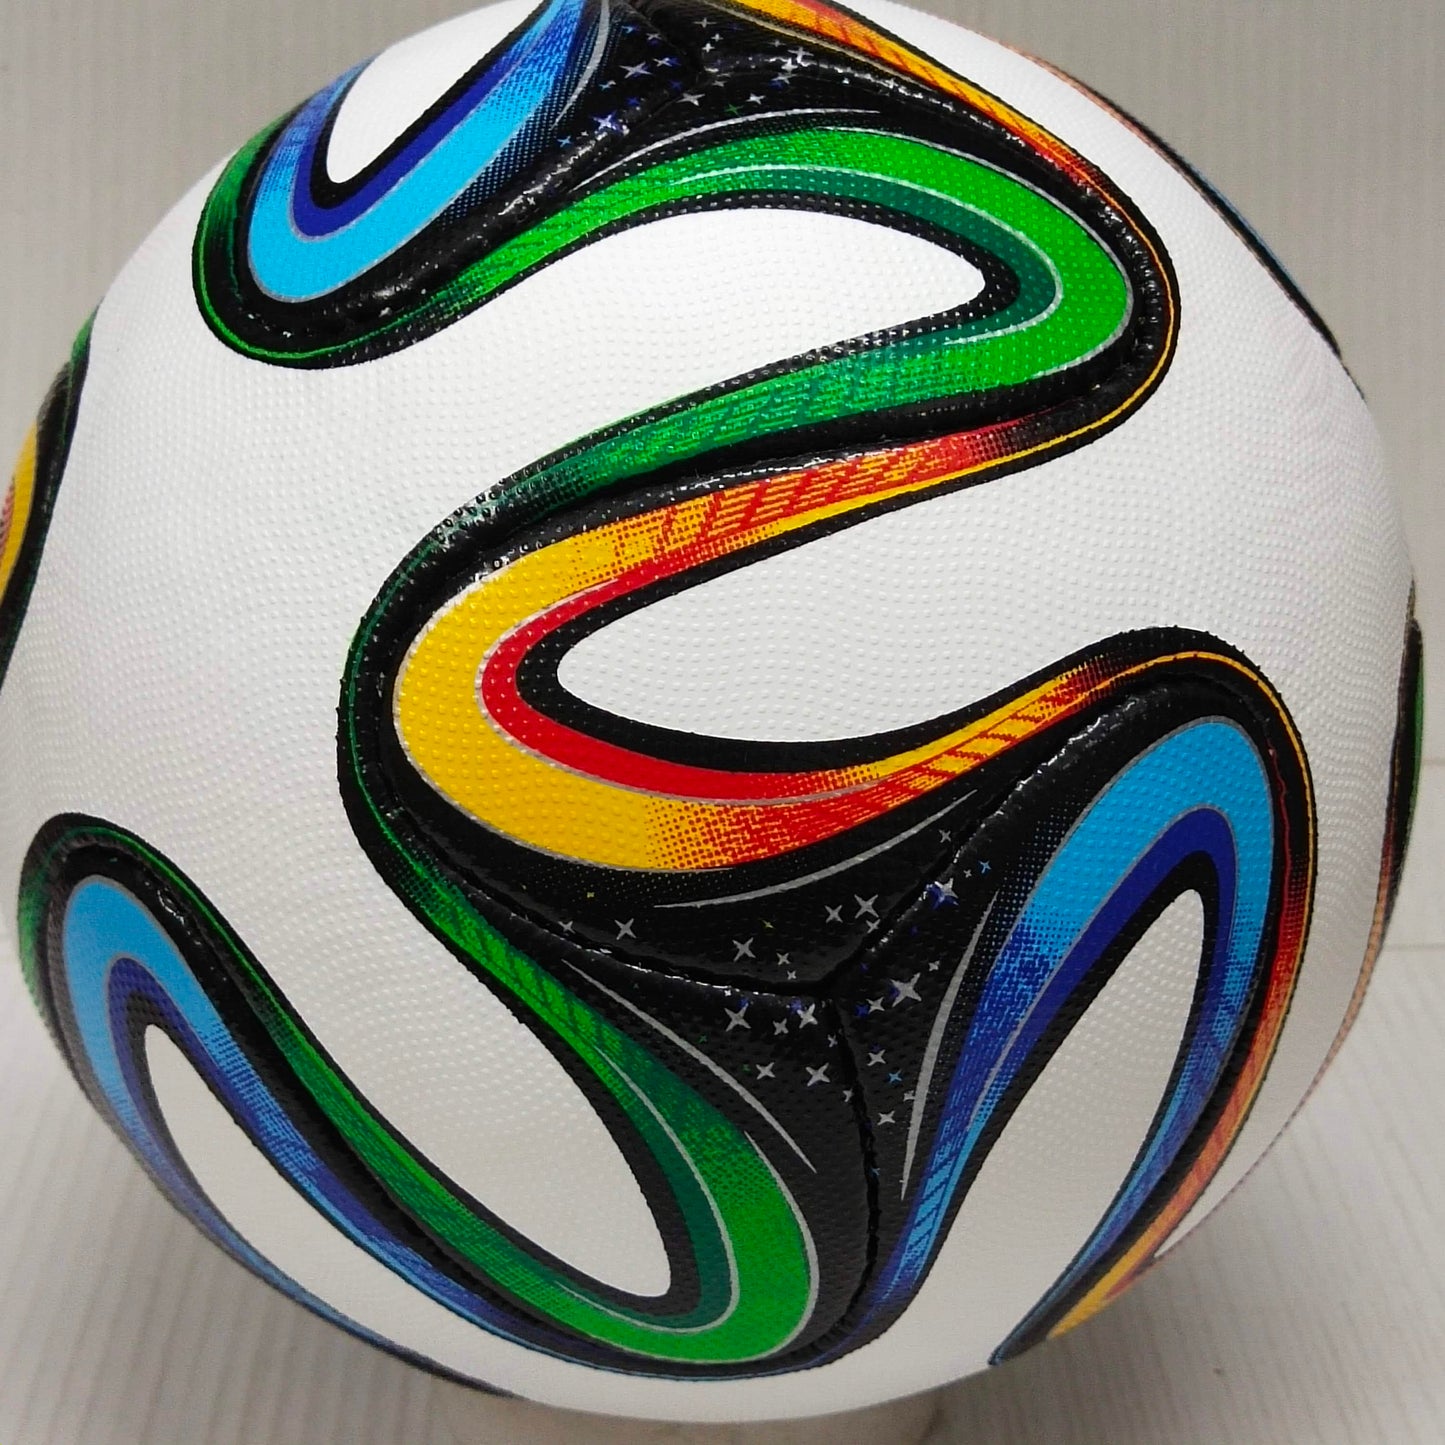 Adidas Brazuca | Match Ball | 2014 | FIFA World Cup Ball | SIZE 5 06